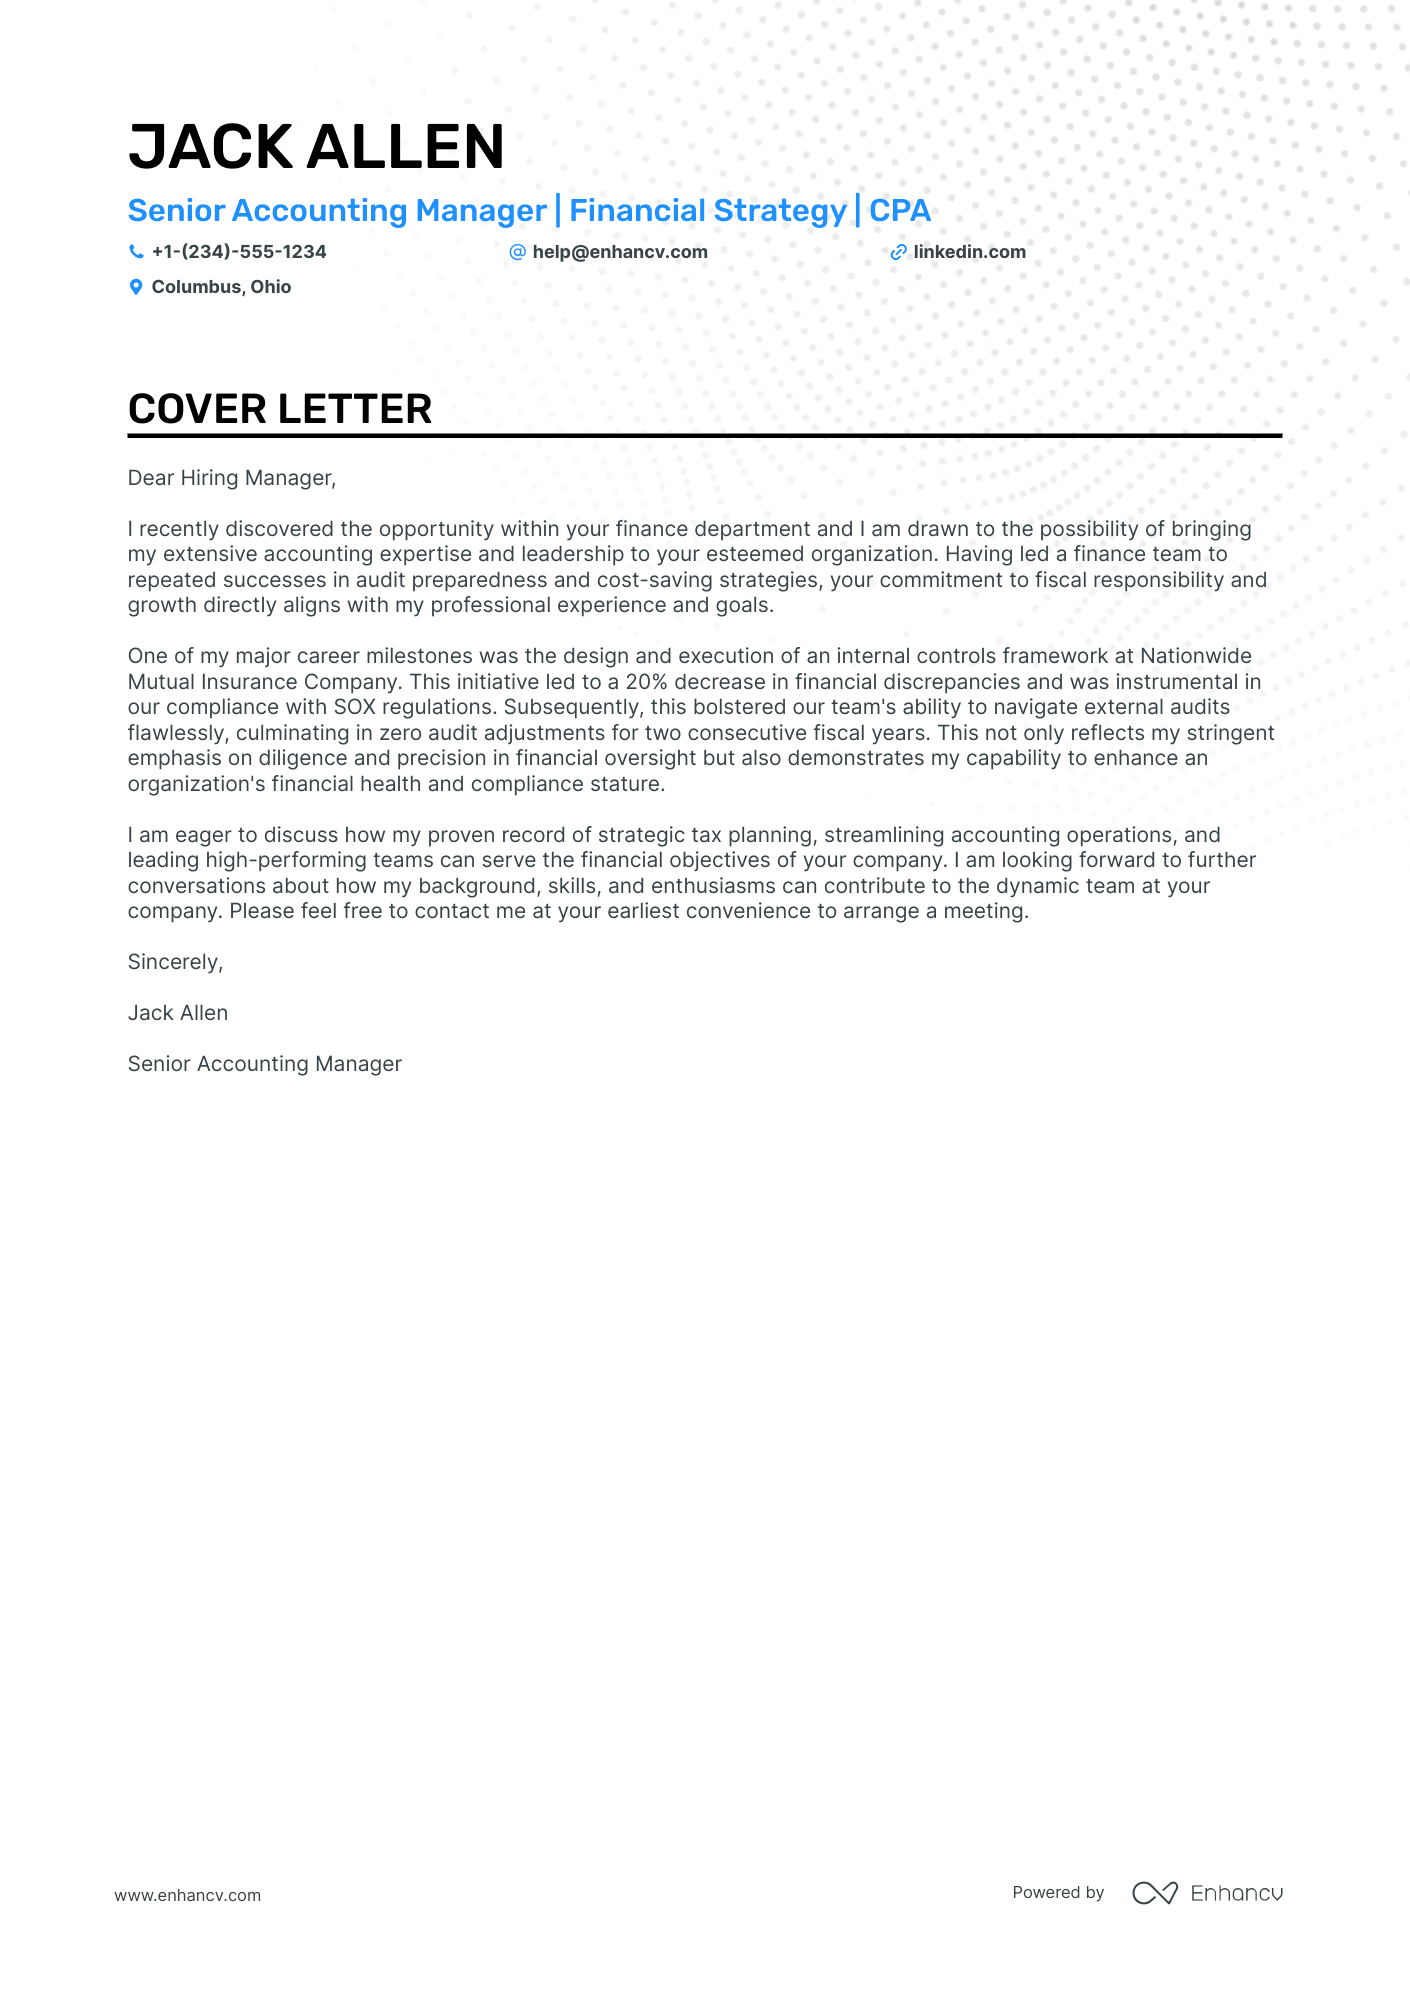 finance job cover letter template